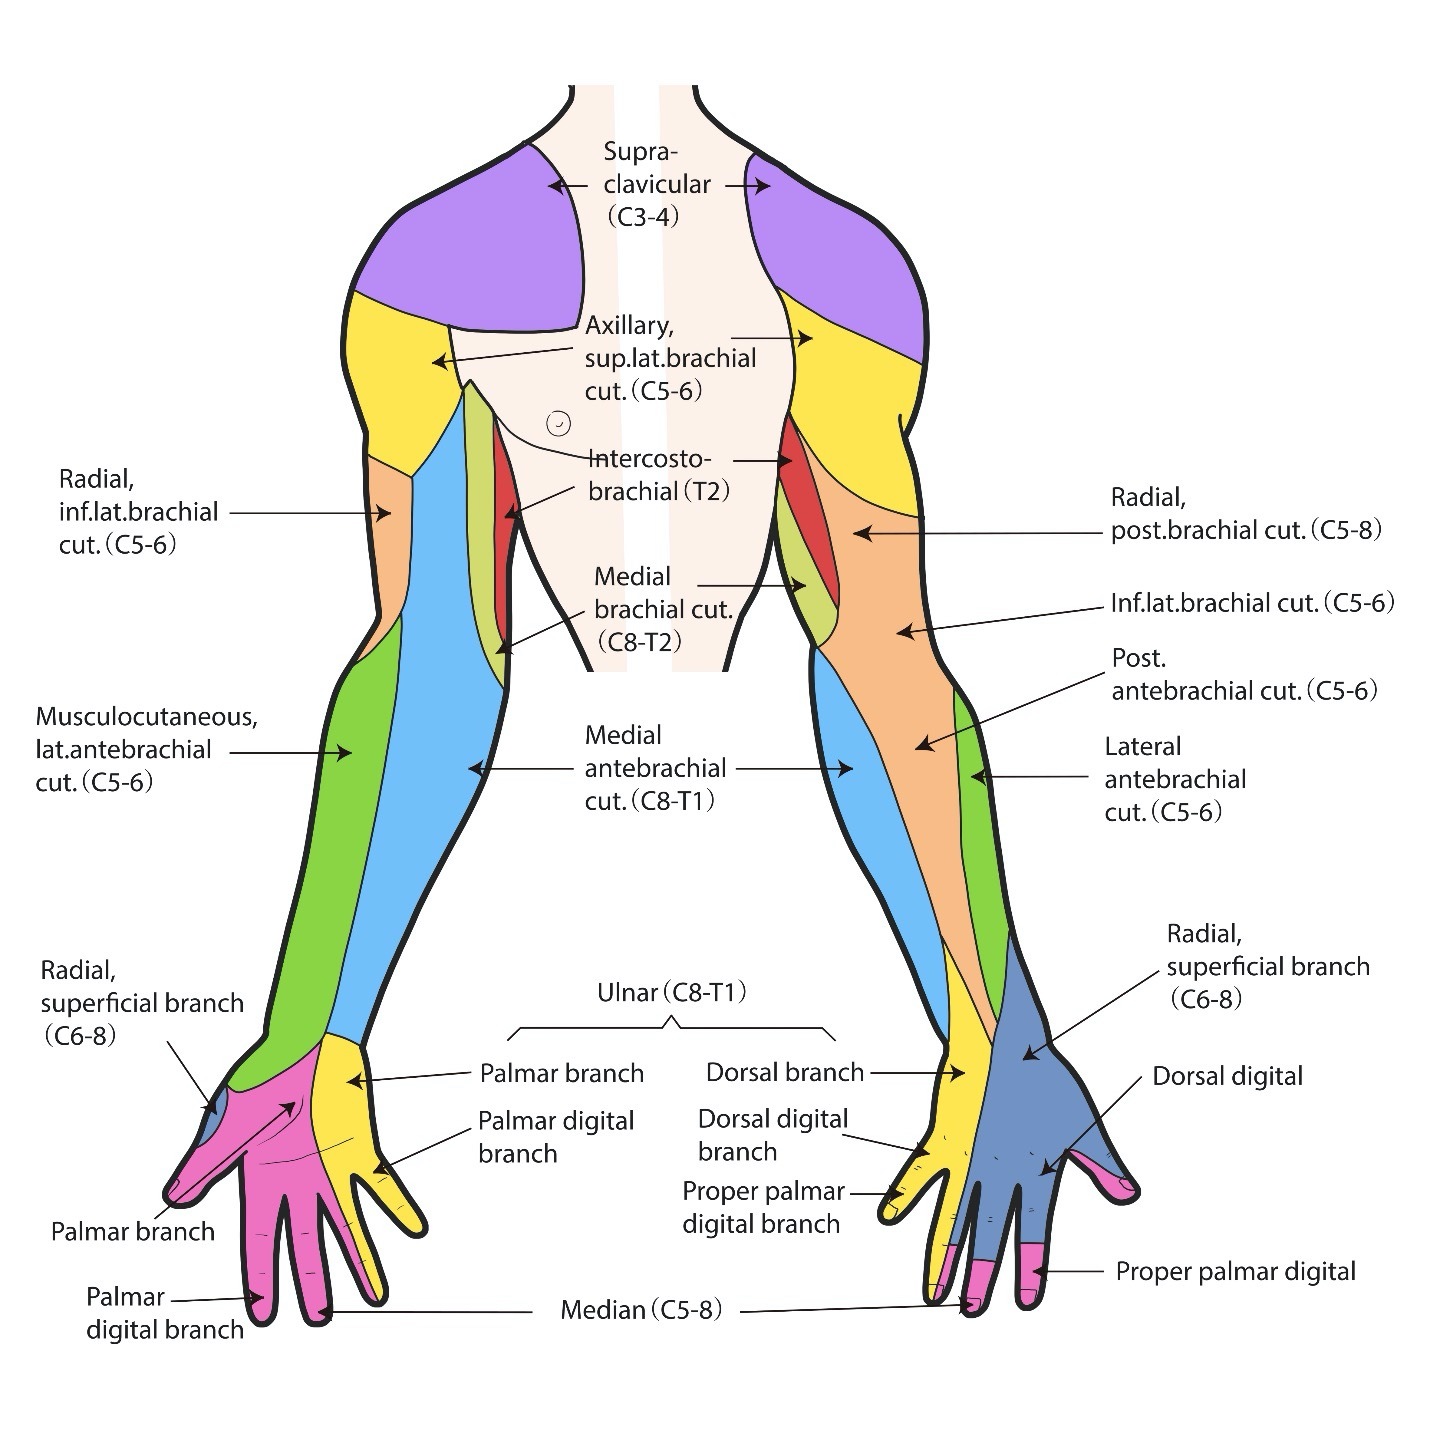 Nerve Pattern of the Brachial Plexus